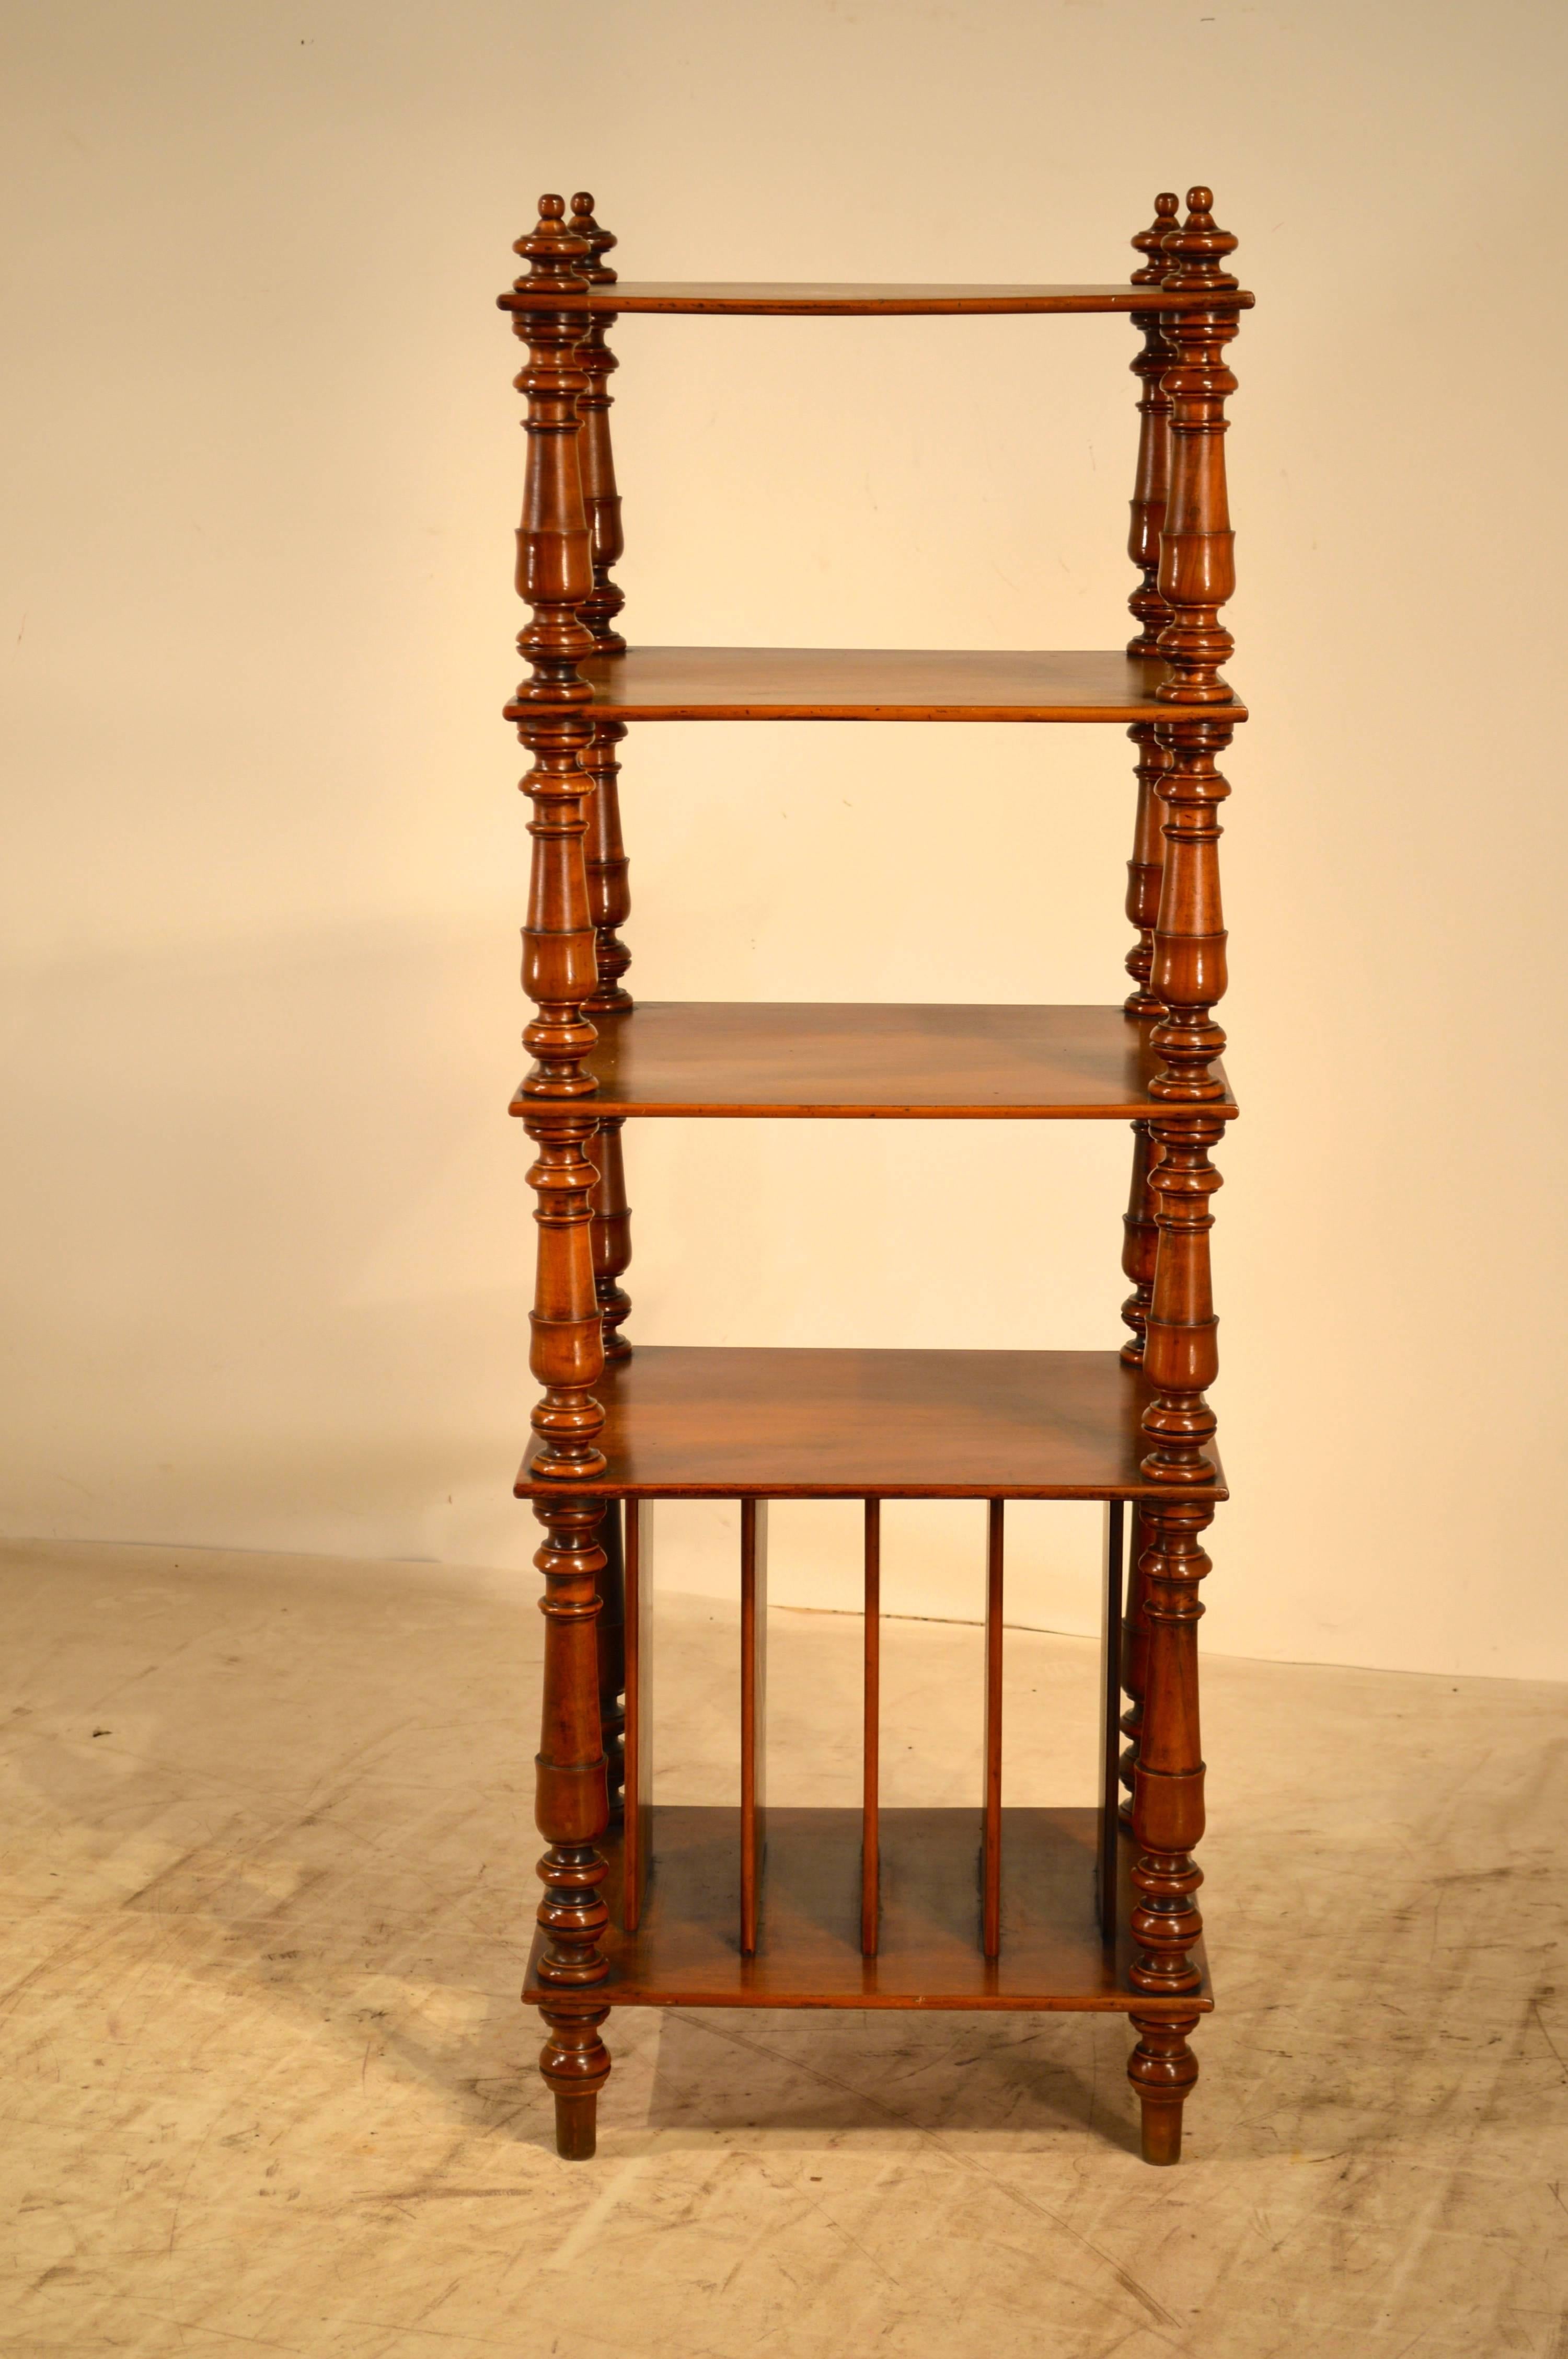 19th century English mahogany standing shelf with turned shelf supports and music shelves on the bottom shelf.